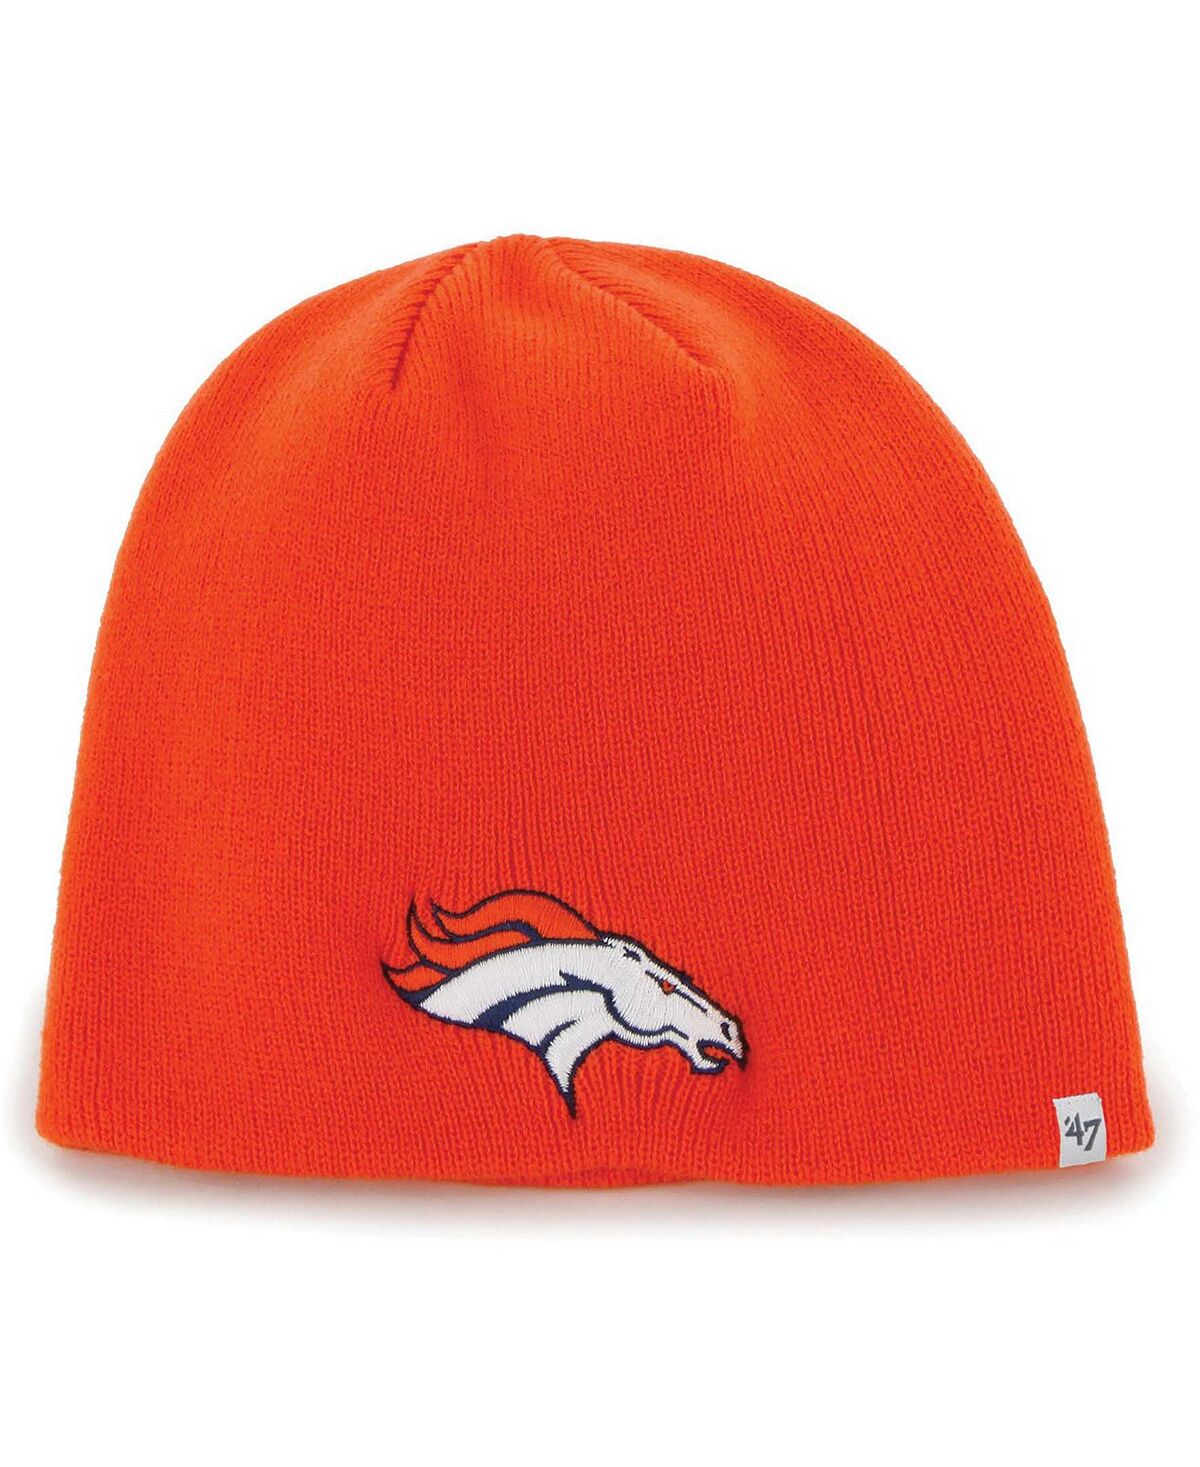 Мужская оранжевая вязаная шапка с логотипом Denver Broncos Secondary '47 Brand